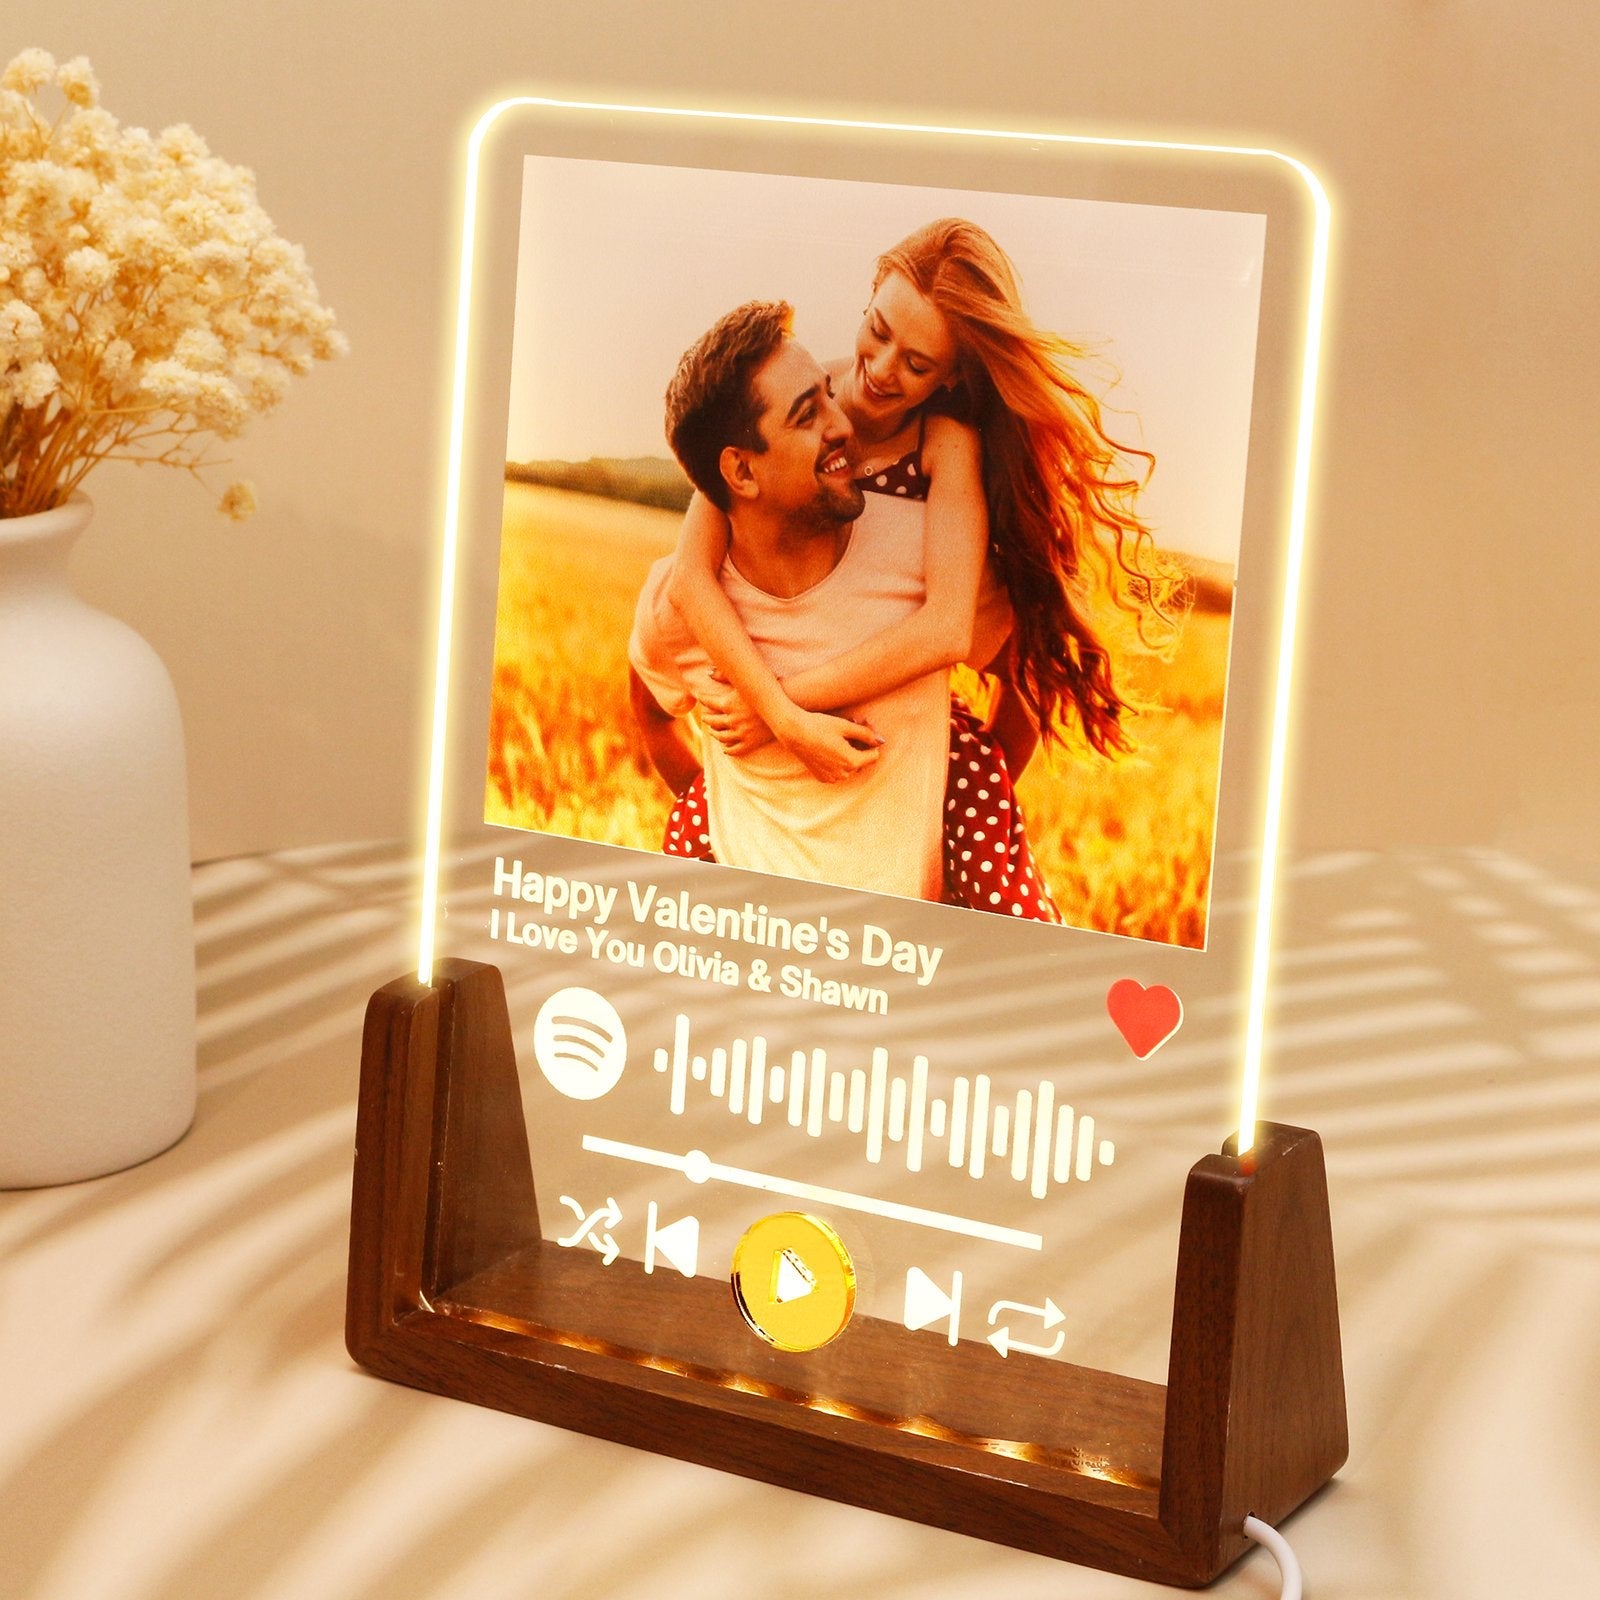 uniqicon Spotify Plaque QR Code music Acrylic picture frames Birthday Personalized Gifts for boyfriend women him sister - uniqicon